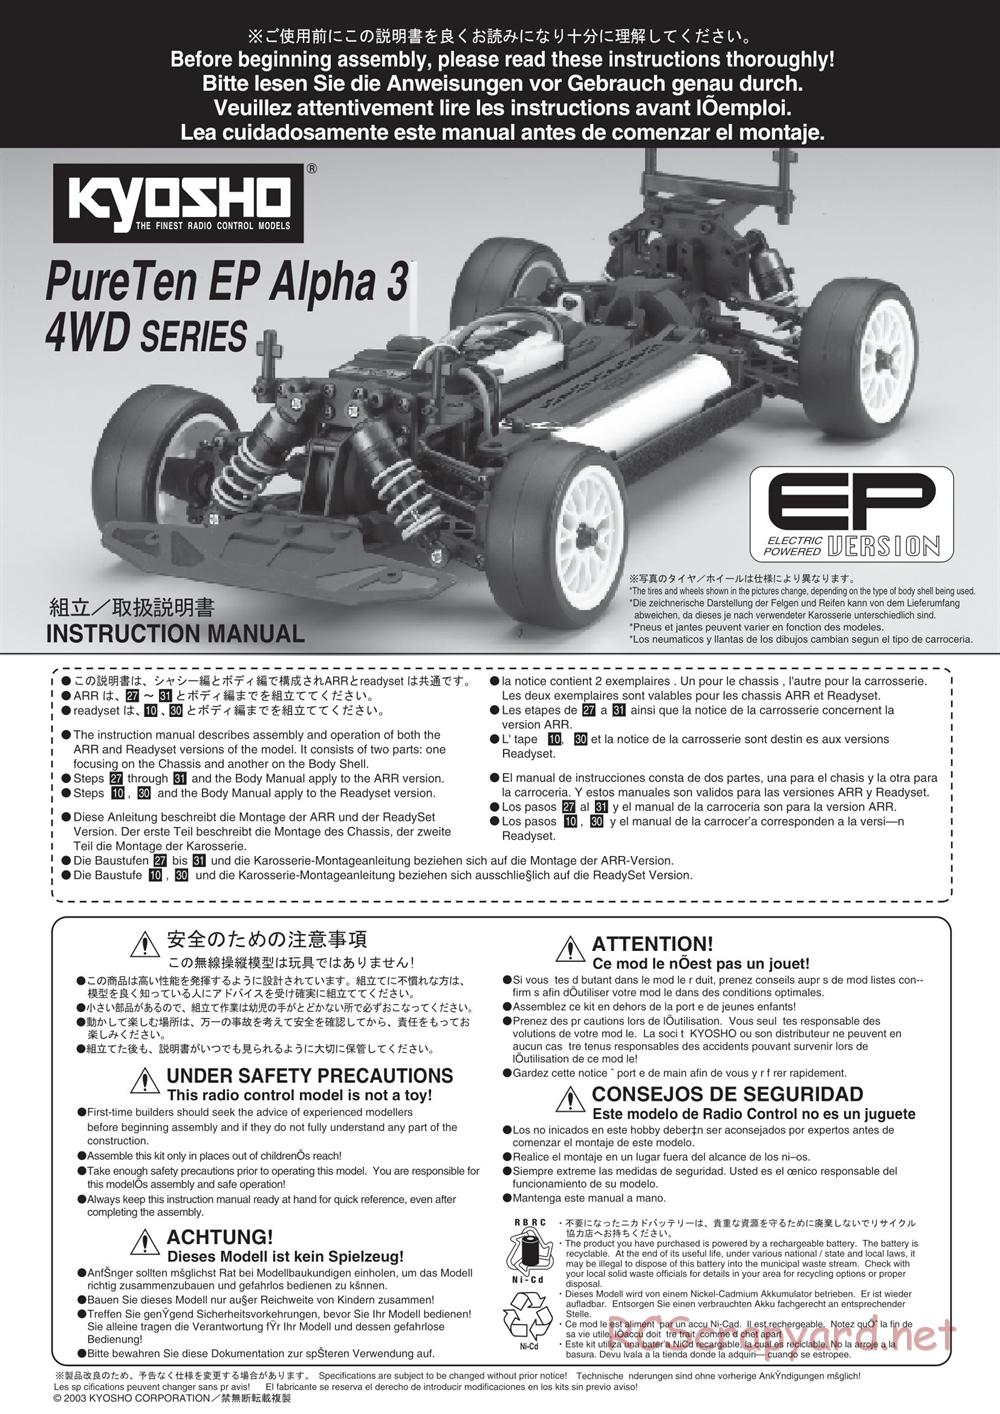 Kyosho - PureTen EP Alpha 3 - Manual - Page 1